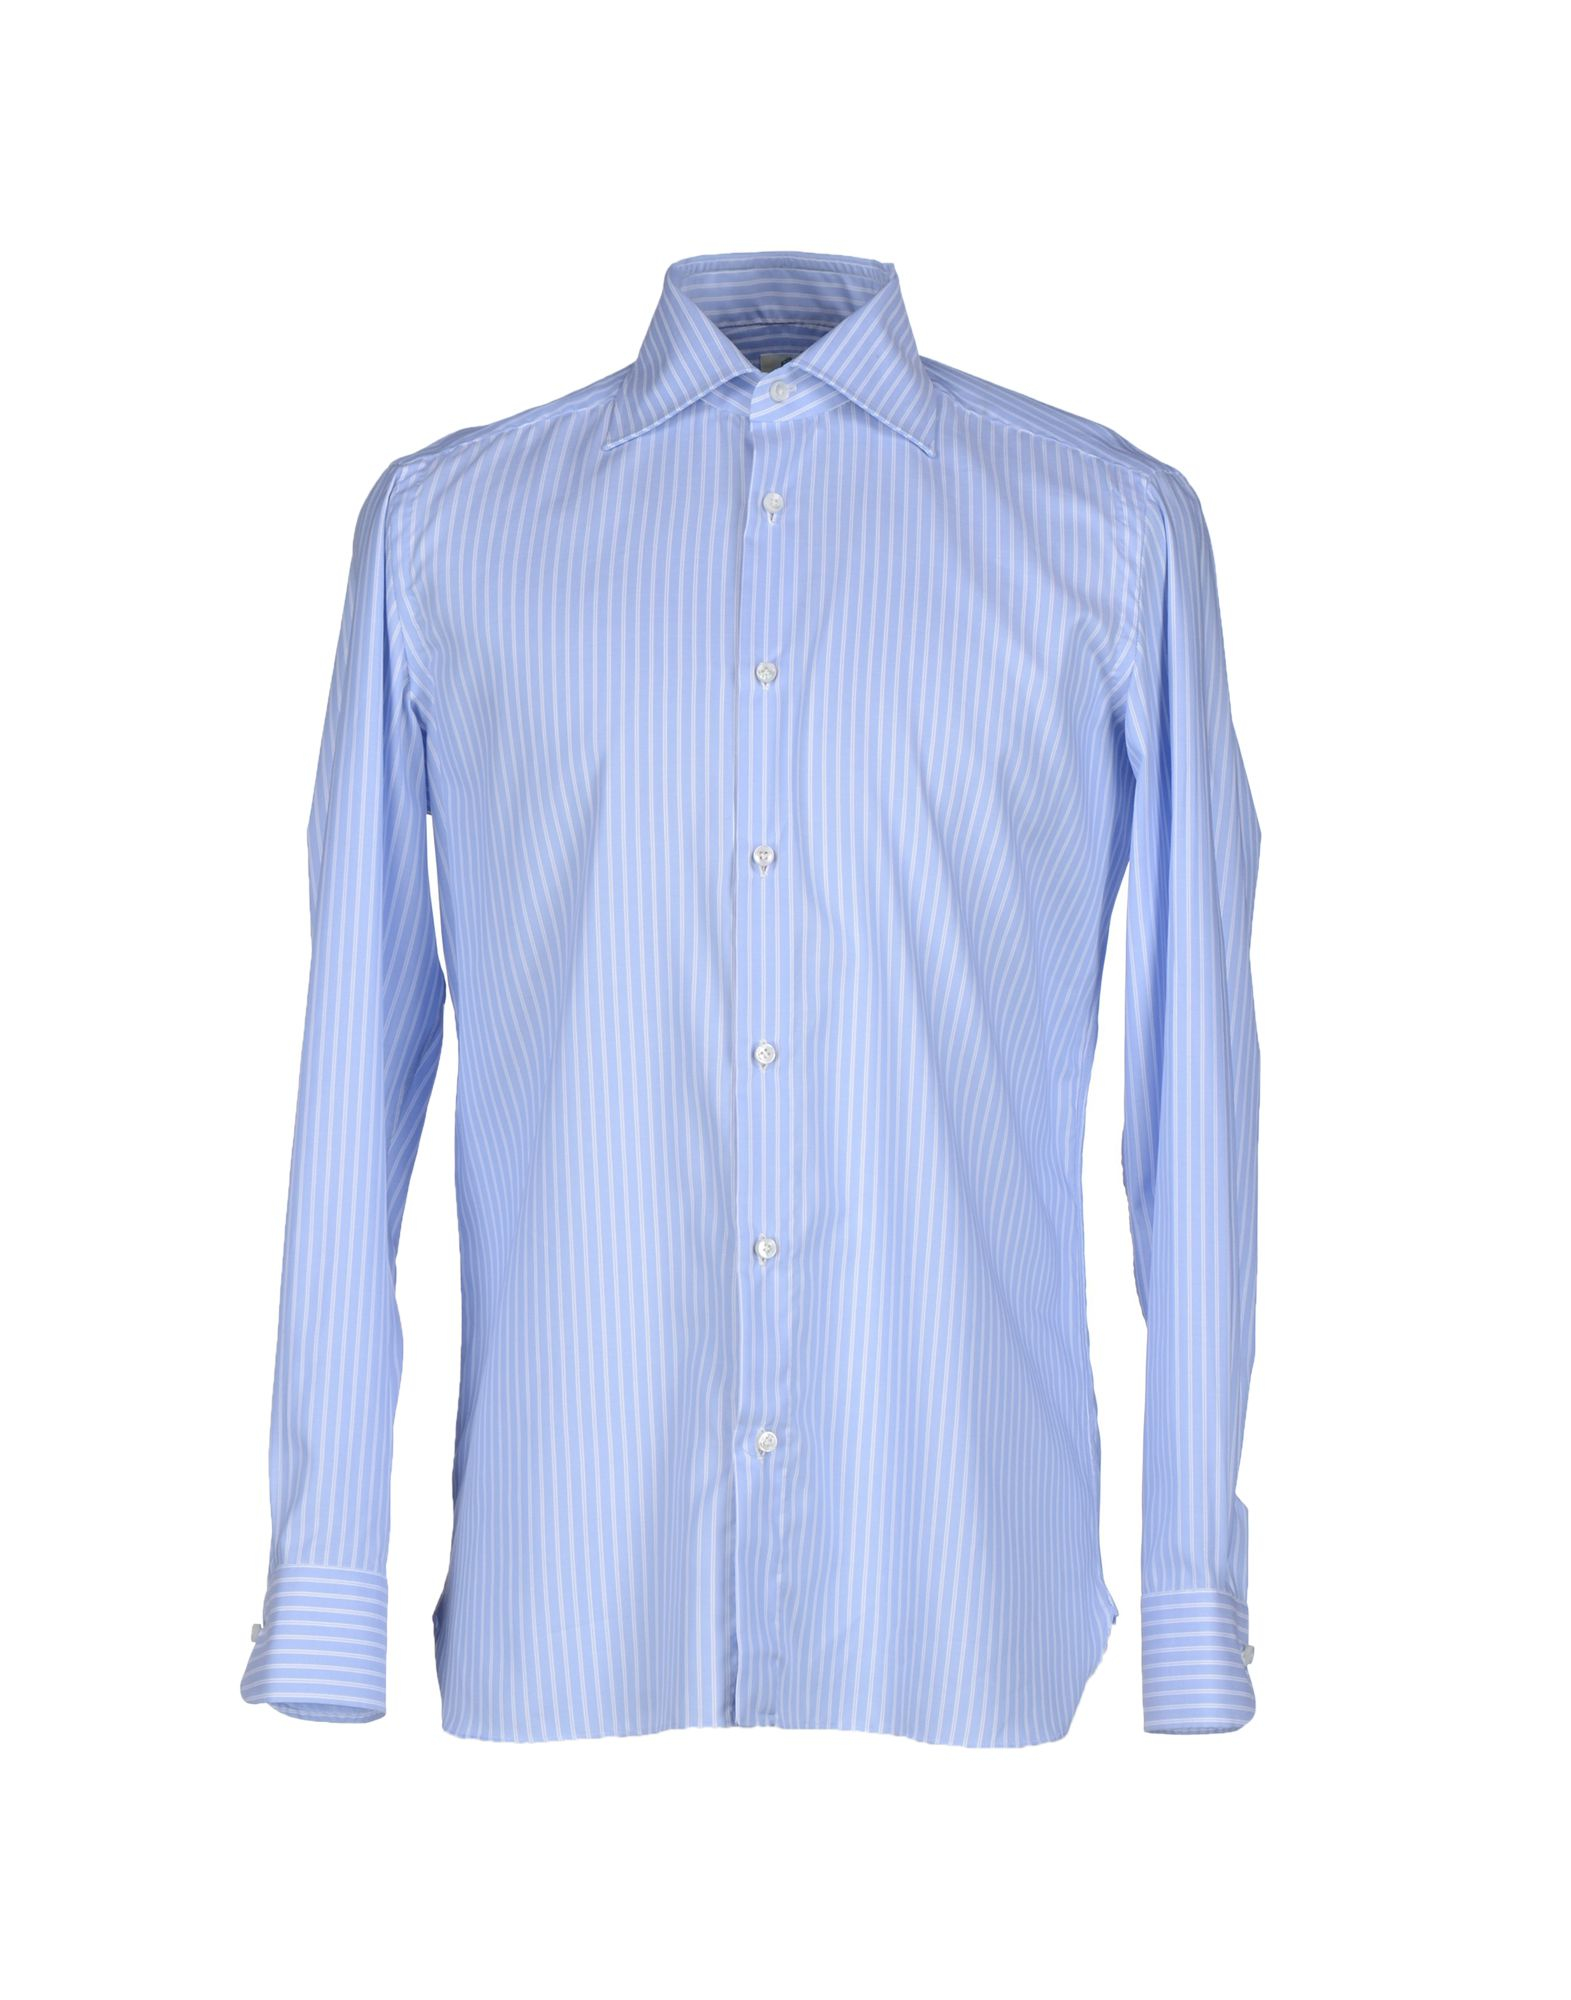 Lyst - Luigi Borrelli Napoli Shirt in Blue for Men